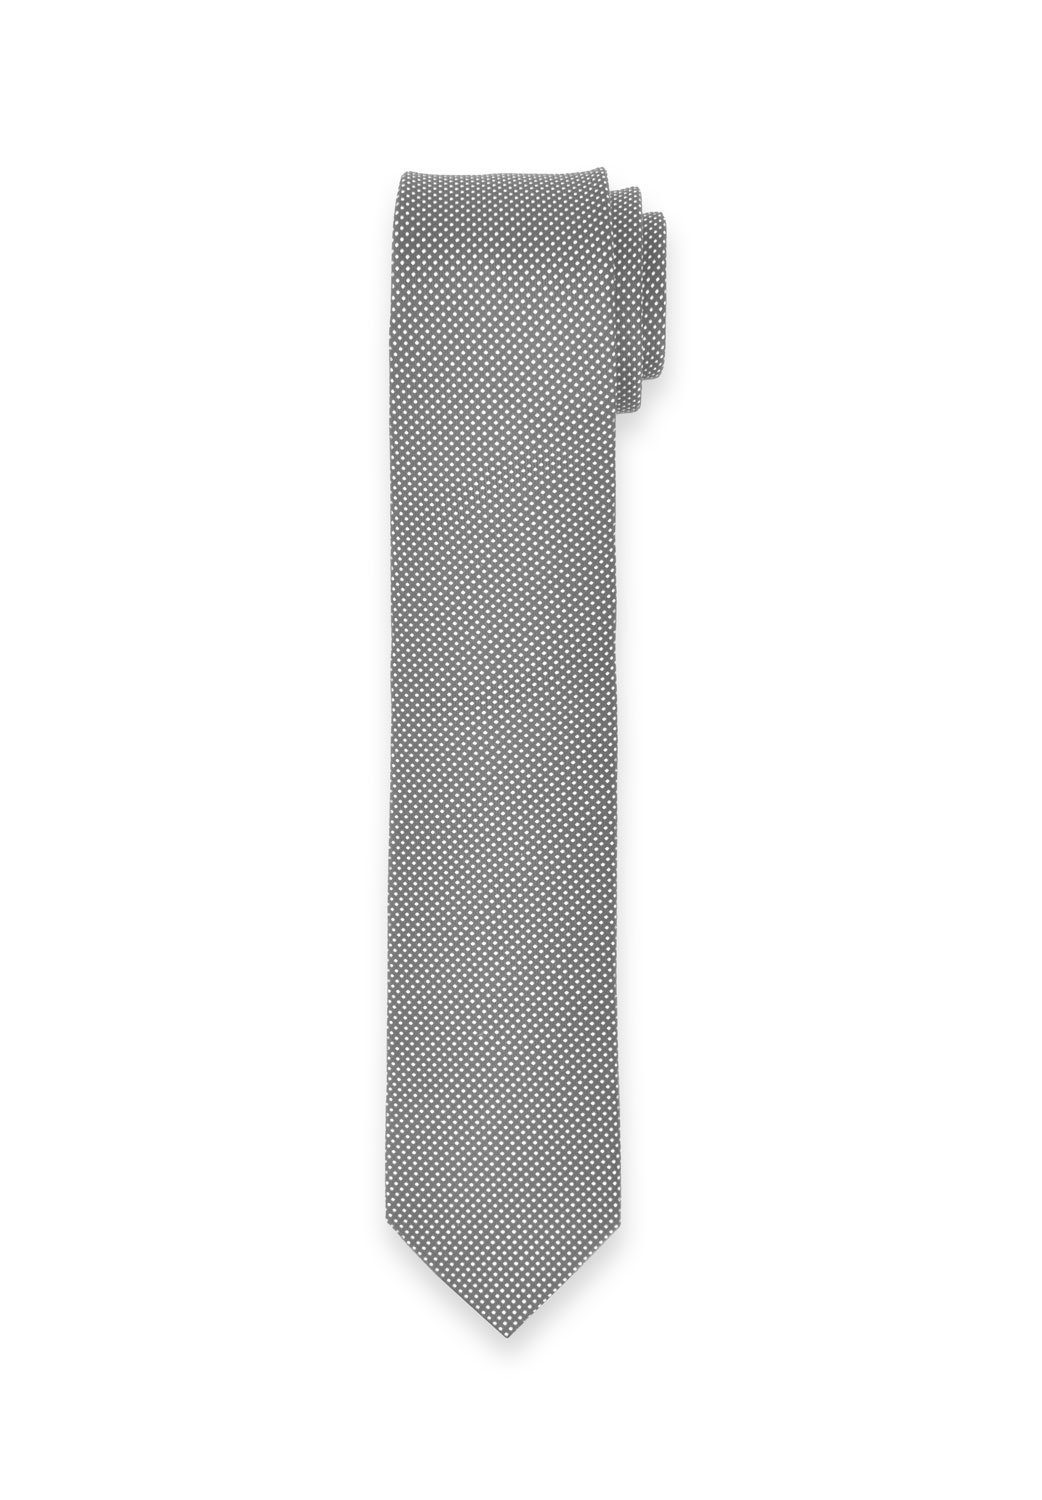 - Krawatte - MARVELIS Grau/Weiß Punkte - 6,5 cm Krawatte